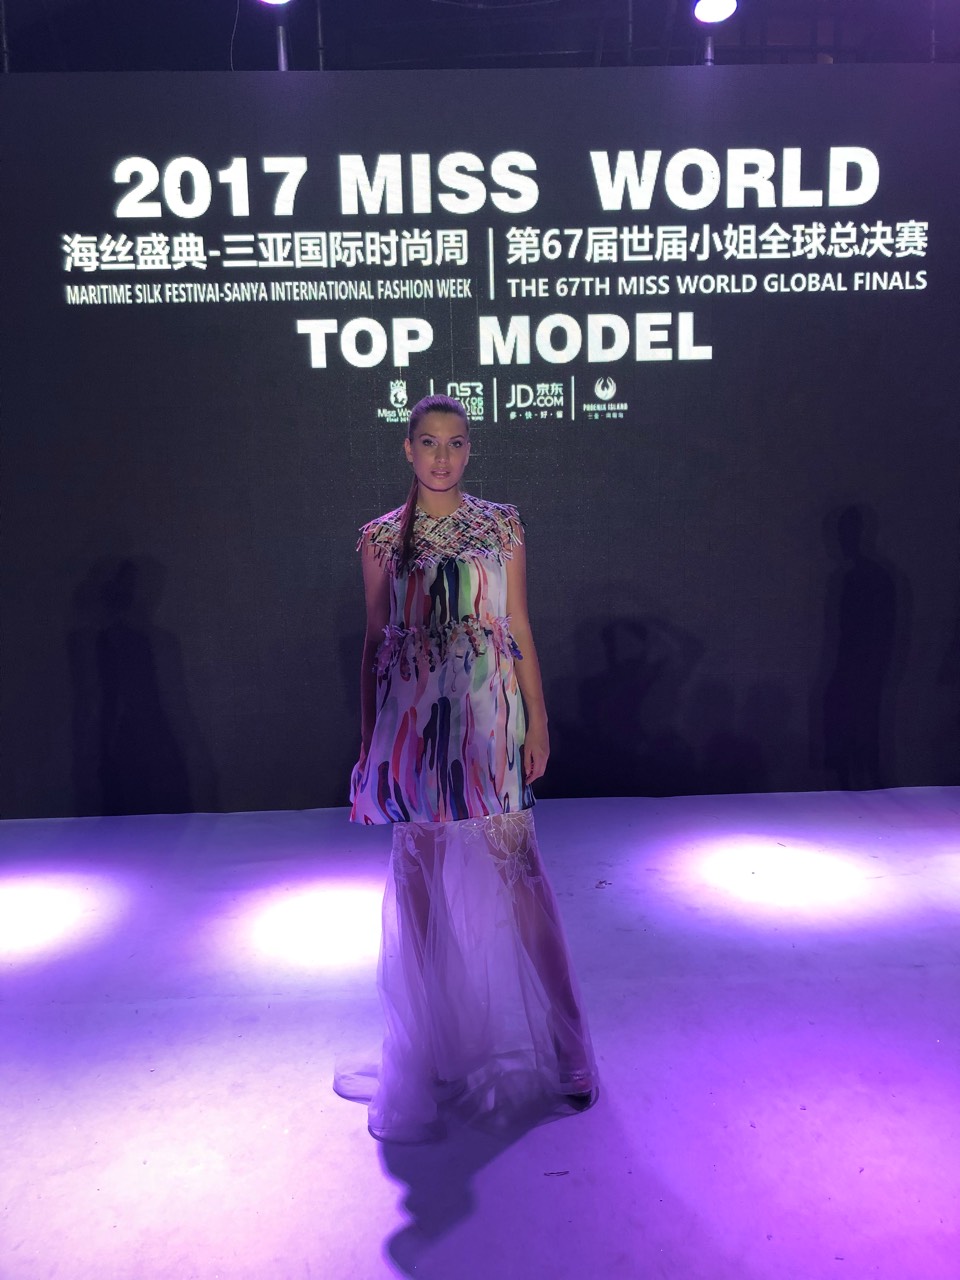 candidatas a miss world 2017, fast track: top model. ganadora: miss nigeria, segunda classificada para top 40 de mw. - Página 7 Image-0-02-06-cf51451c0cabbdf29f914fabfa7f1a792ddeac6db9a5d30fa91be6e7e957dcd9-V